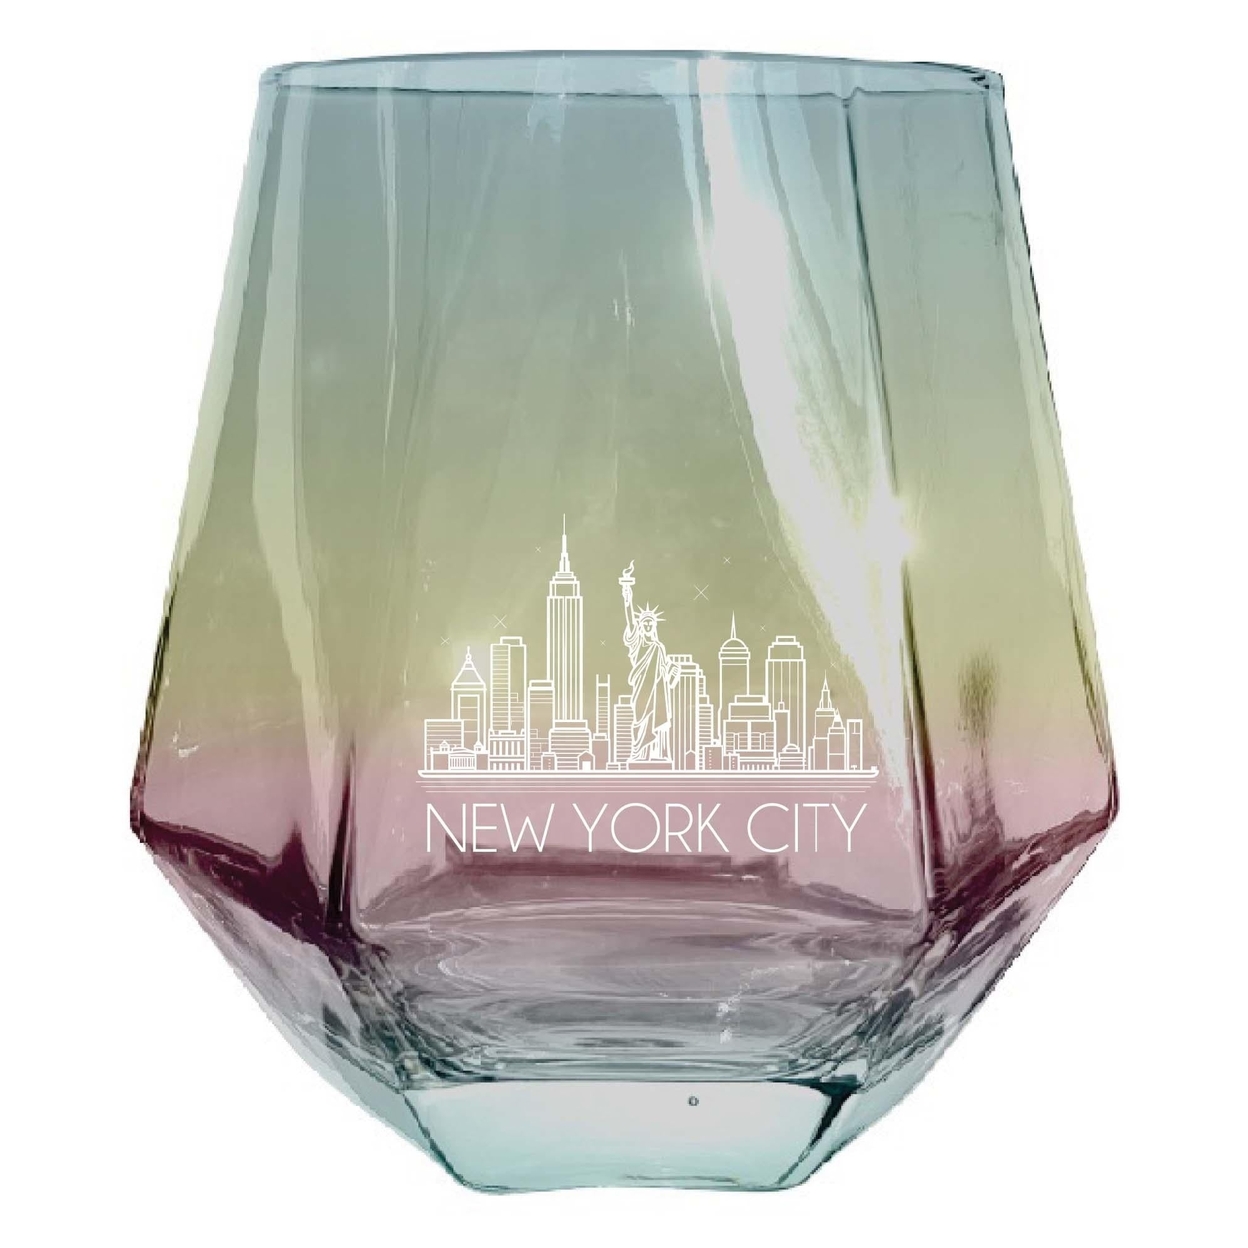 New York City Souvenir Wine Glass EngravedDiamond 15 Oz - Iridescent,,2-Pack